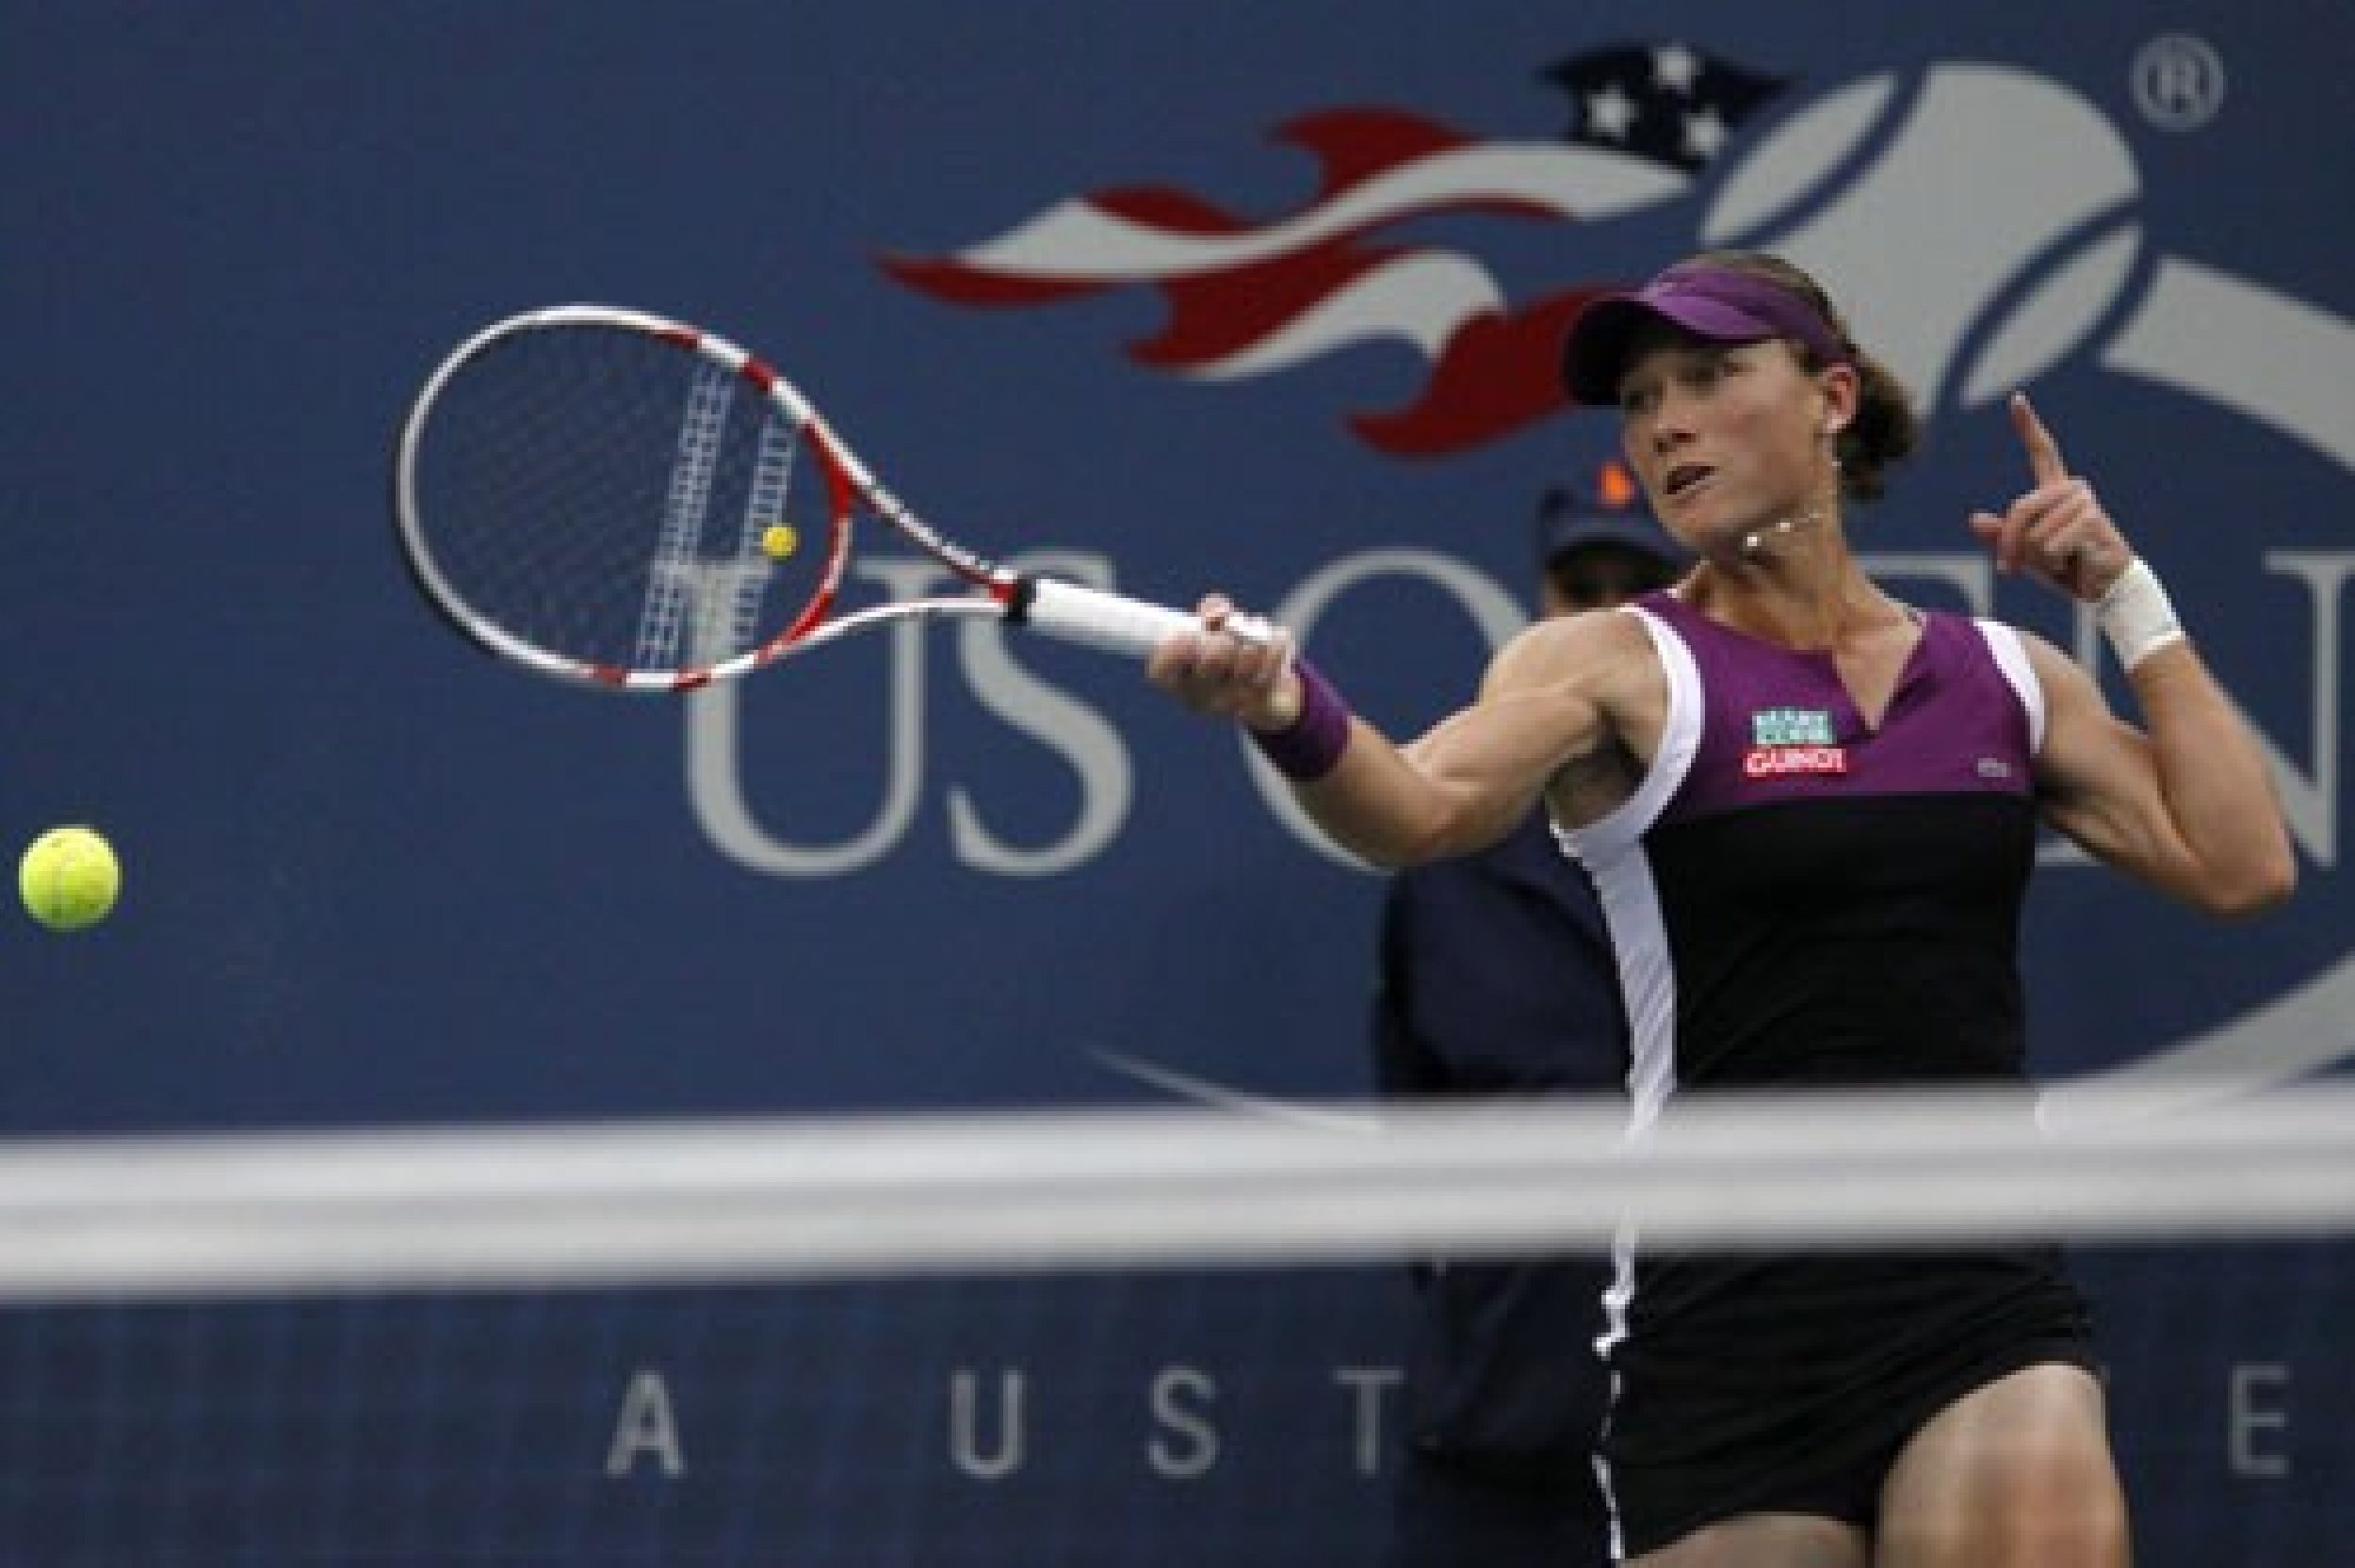 Samantha Stosur AUS with a big return against Serena Williams USA